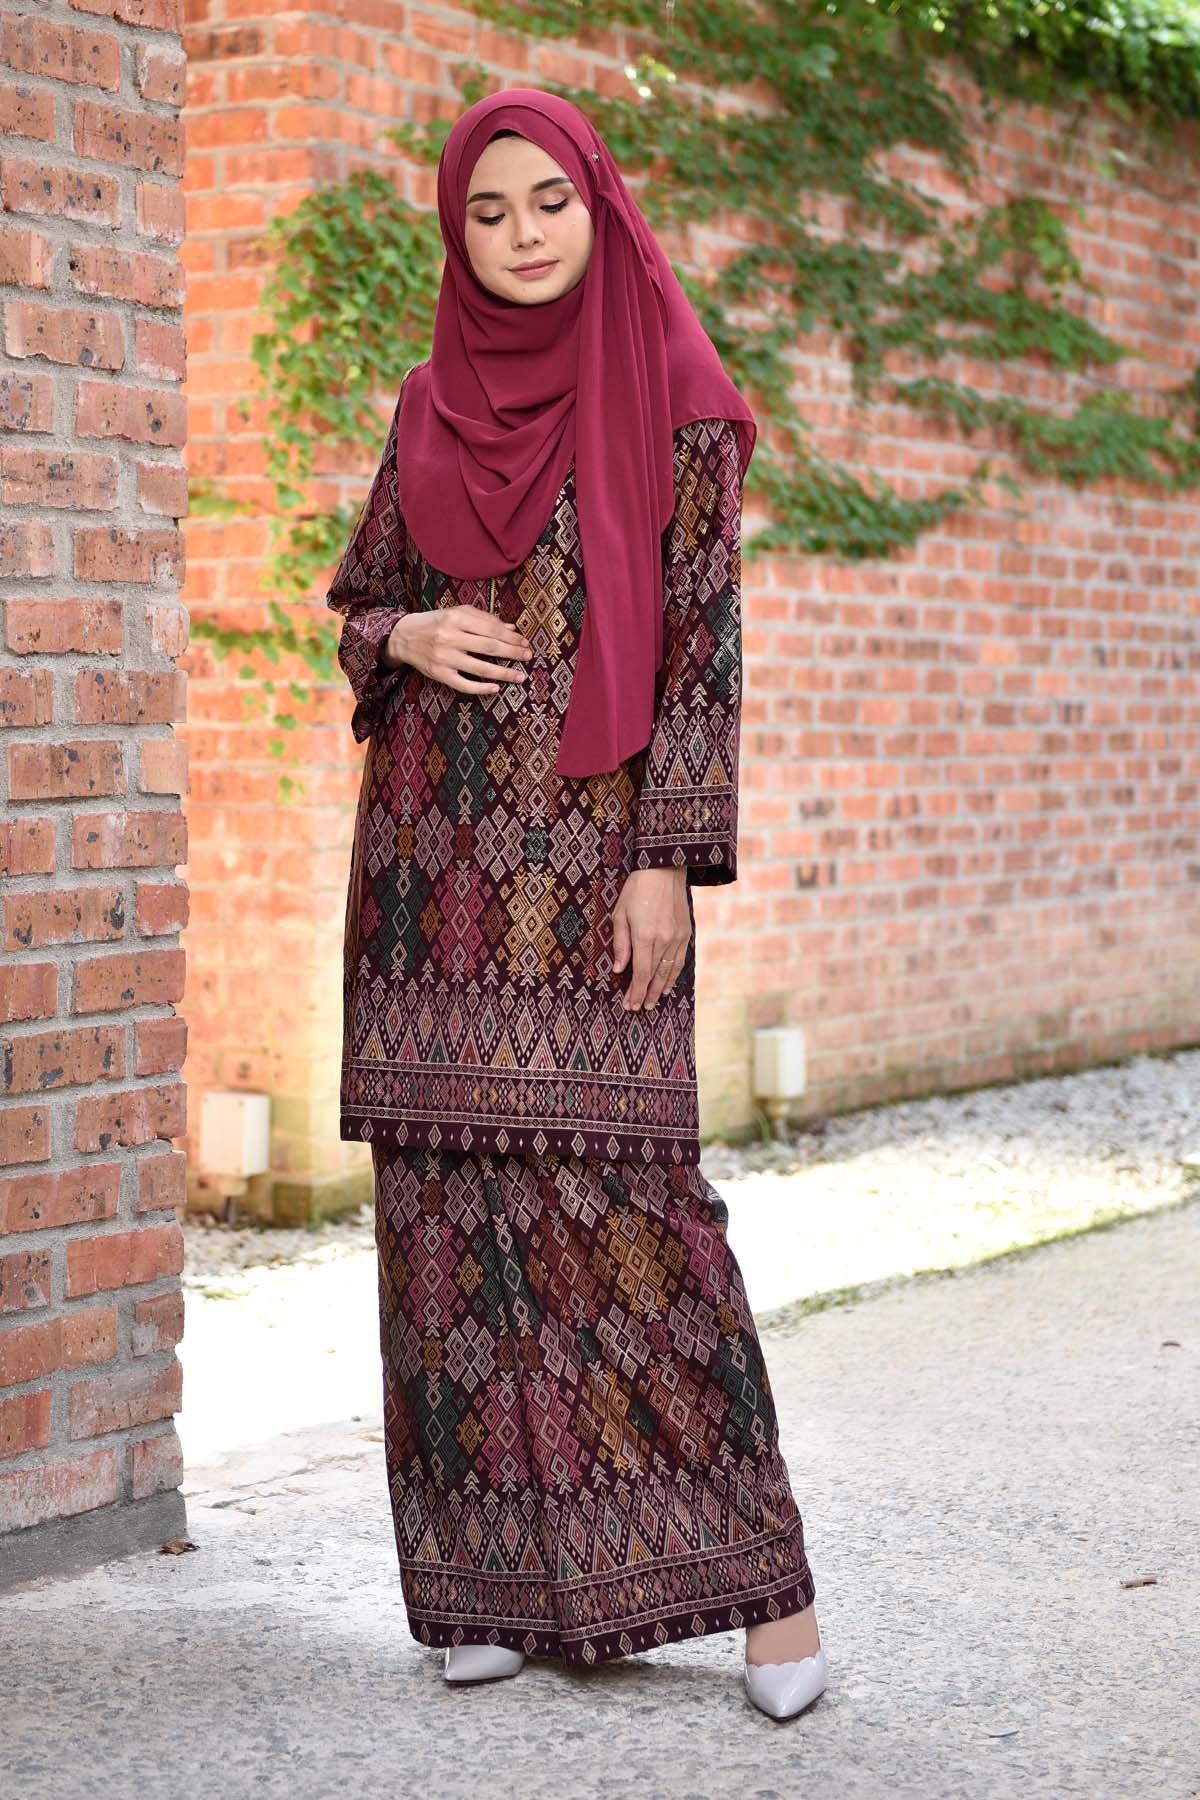 Model Bridesmaid Hijab Batik H9d9 Baju Kurung songket Luella Deep Maroon